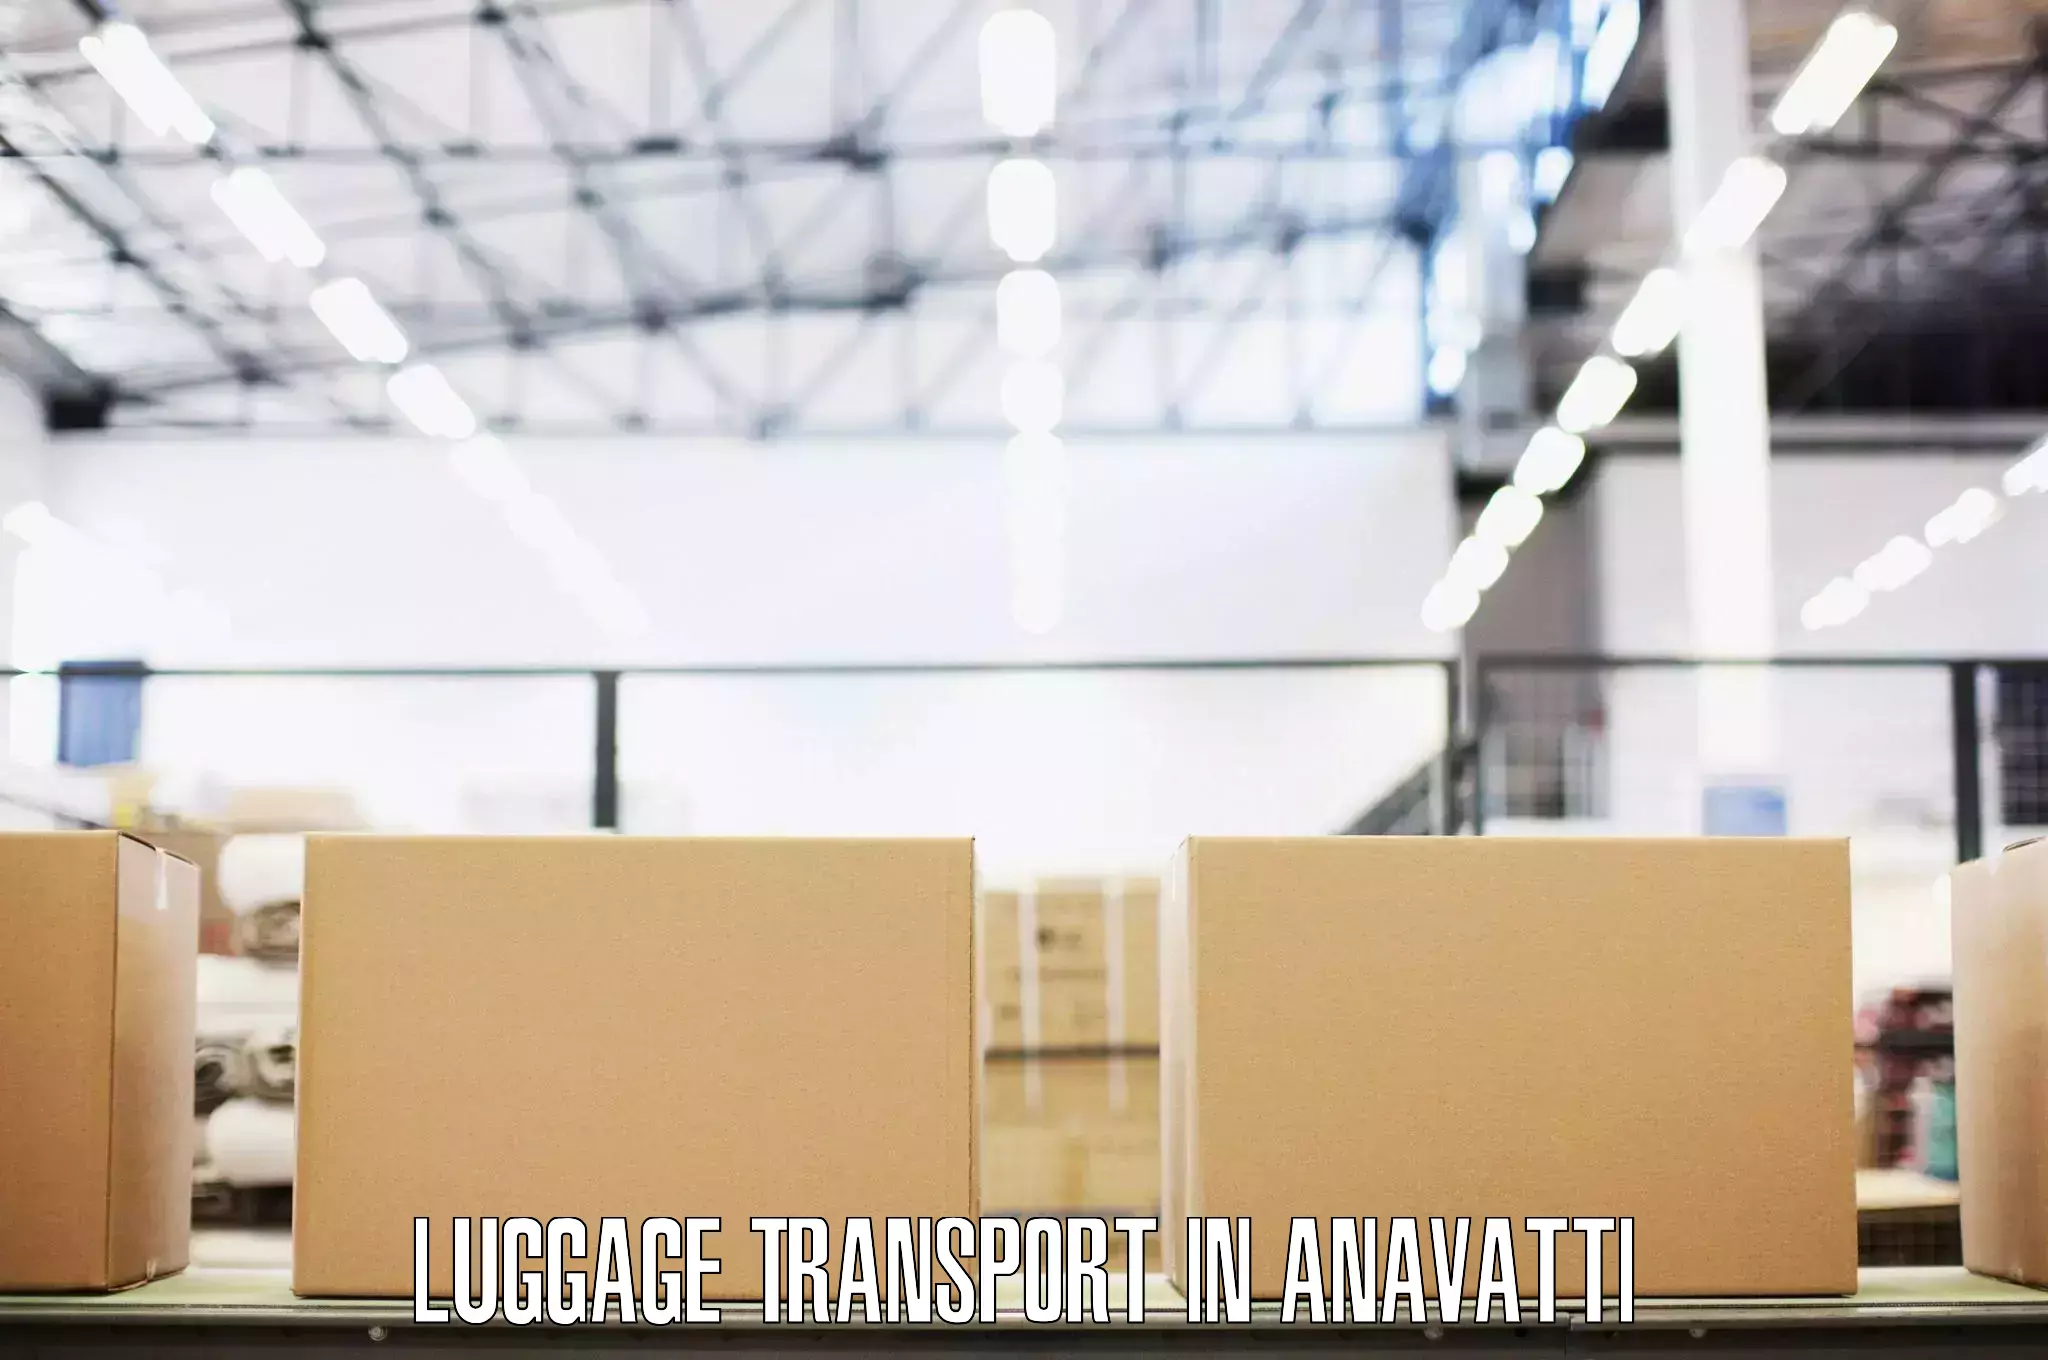 Luggage transport consultancy in Anavatti